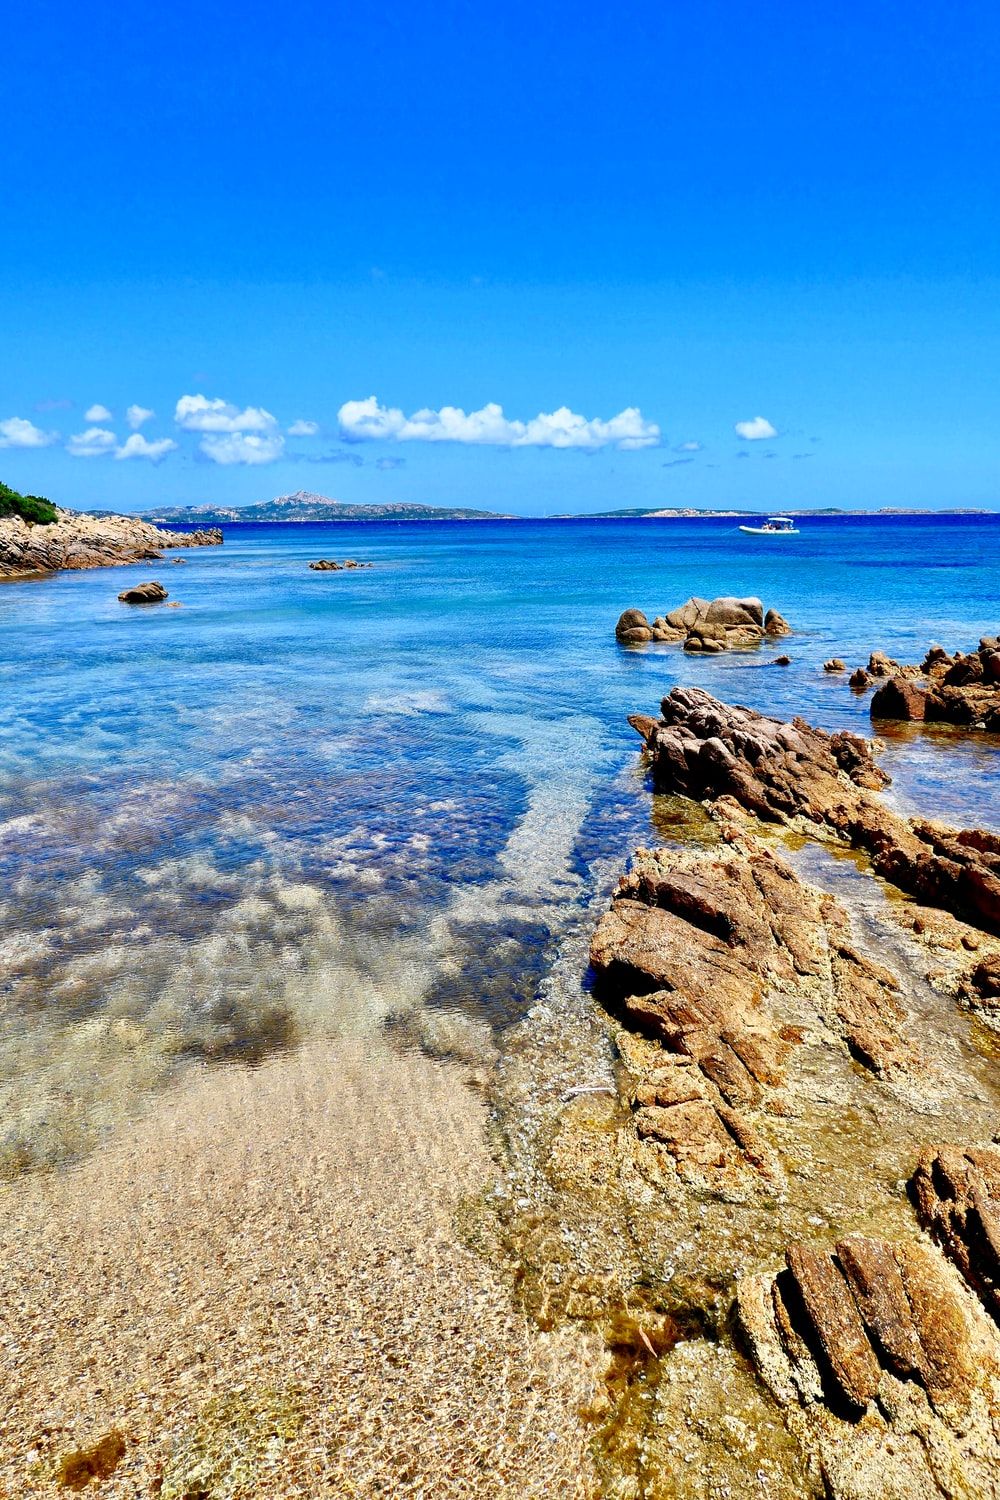 Sardinia Picture. Download Free Image